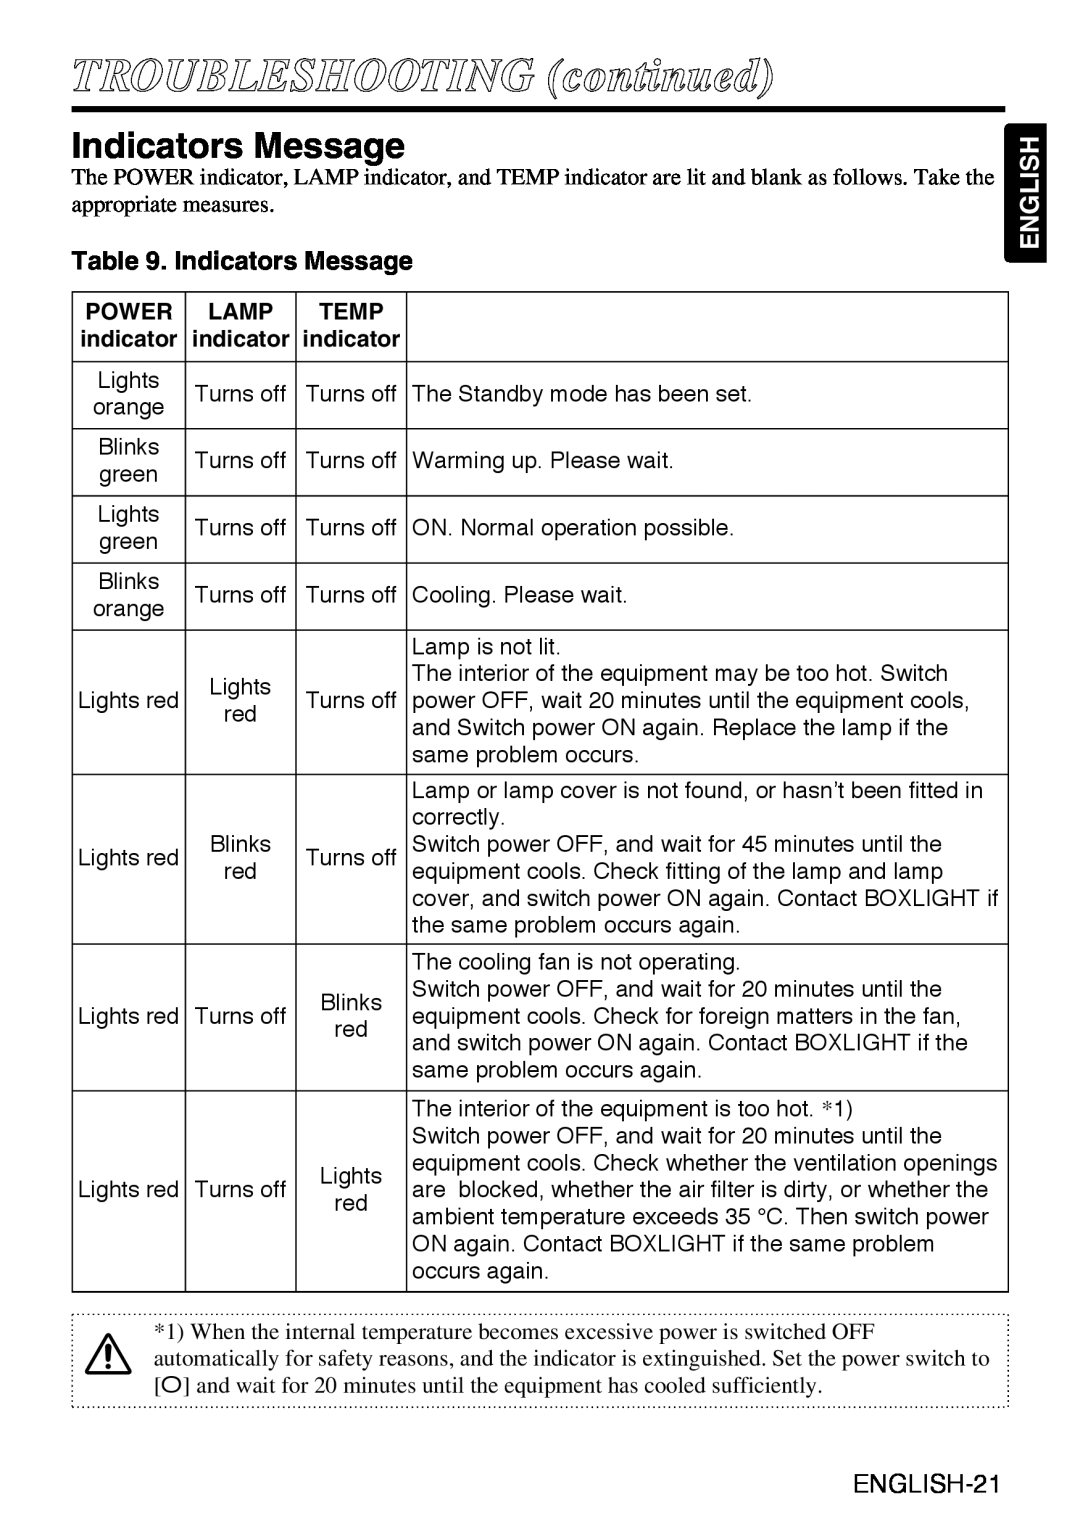 Grundig CP-731i user manual TROUBLESHOOTING continued, Indicators Message, English, Power, Lamp, Temp, indicator 